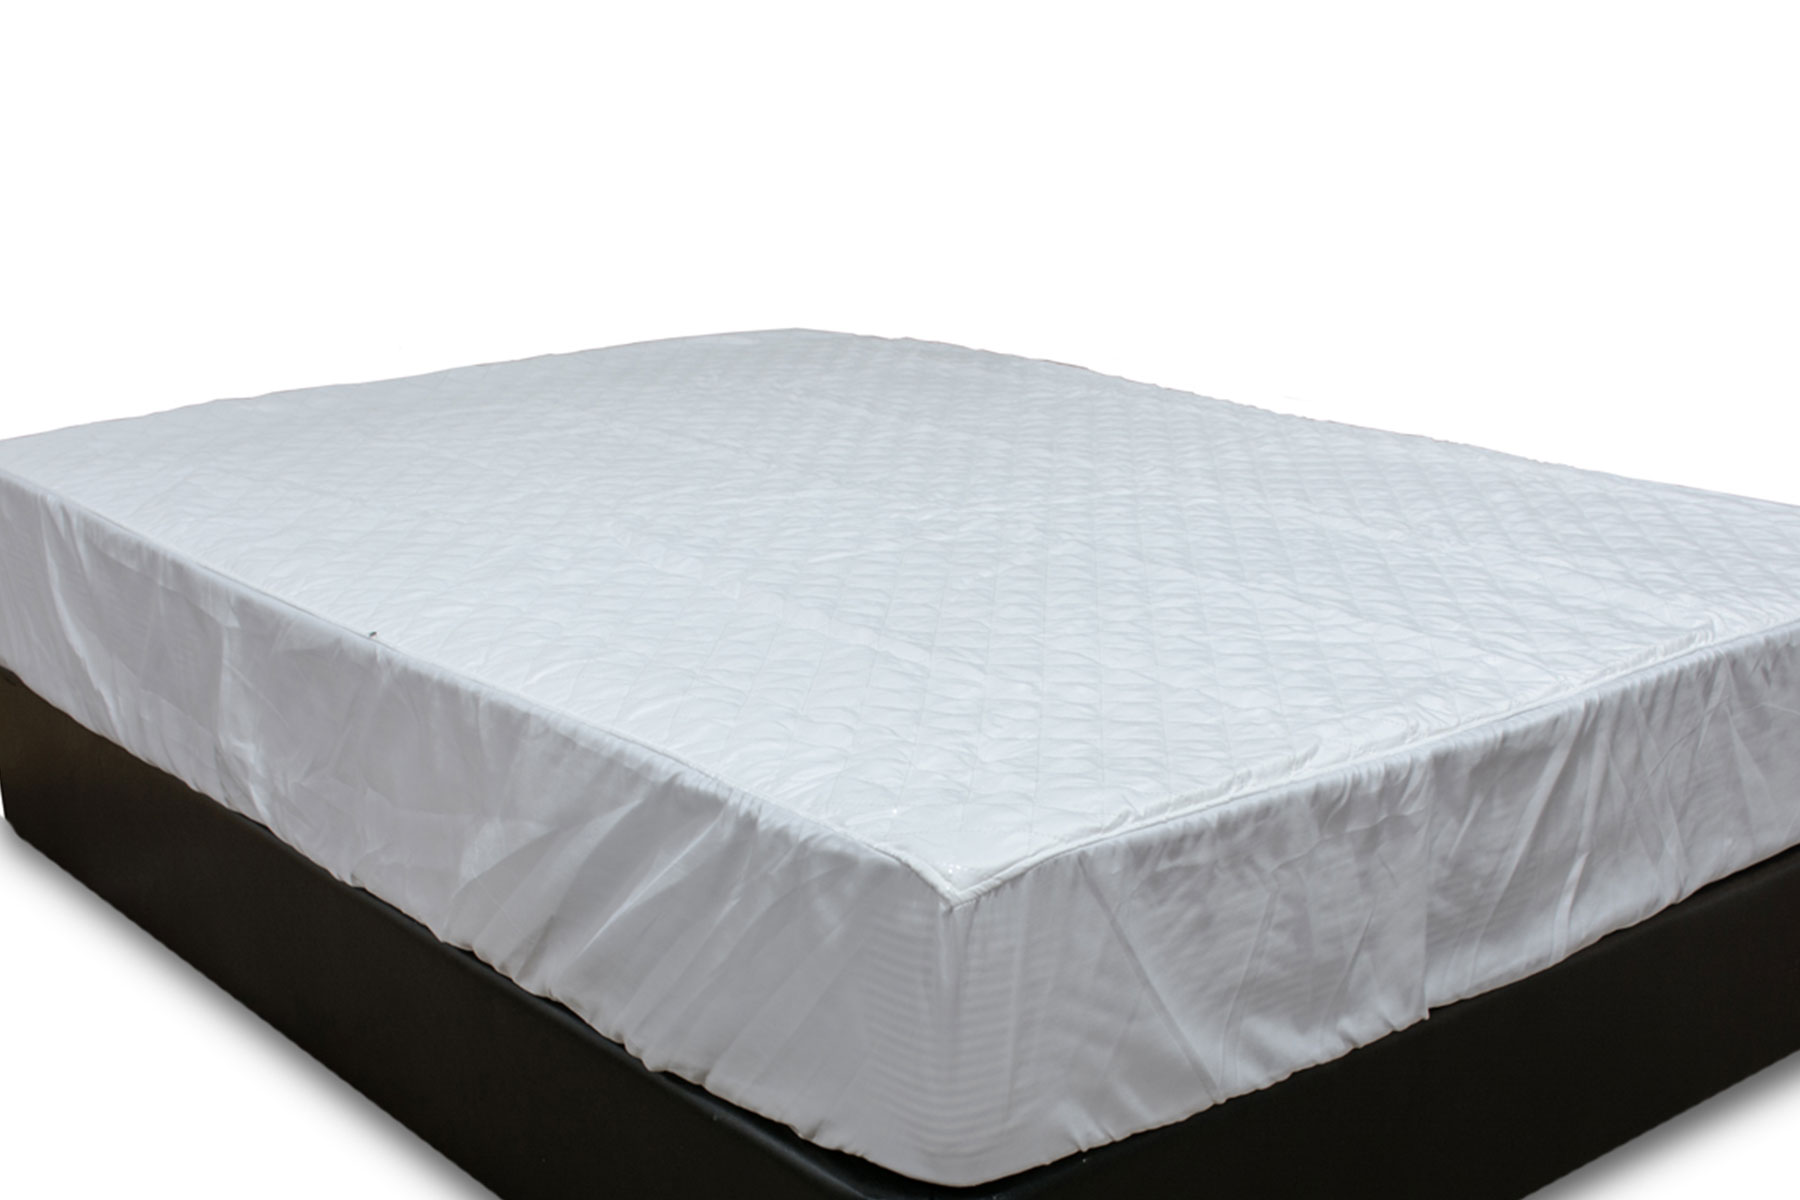 80 x 98 mattress protector